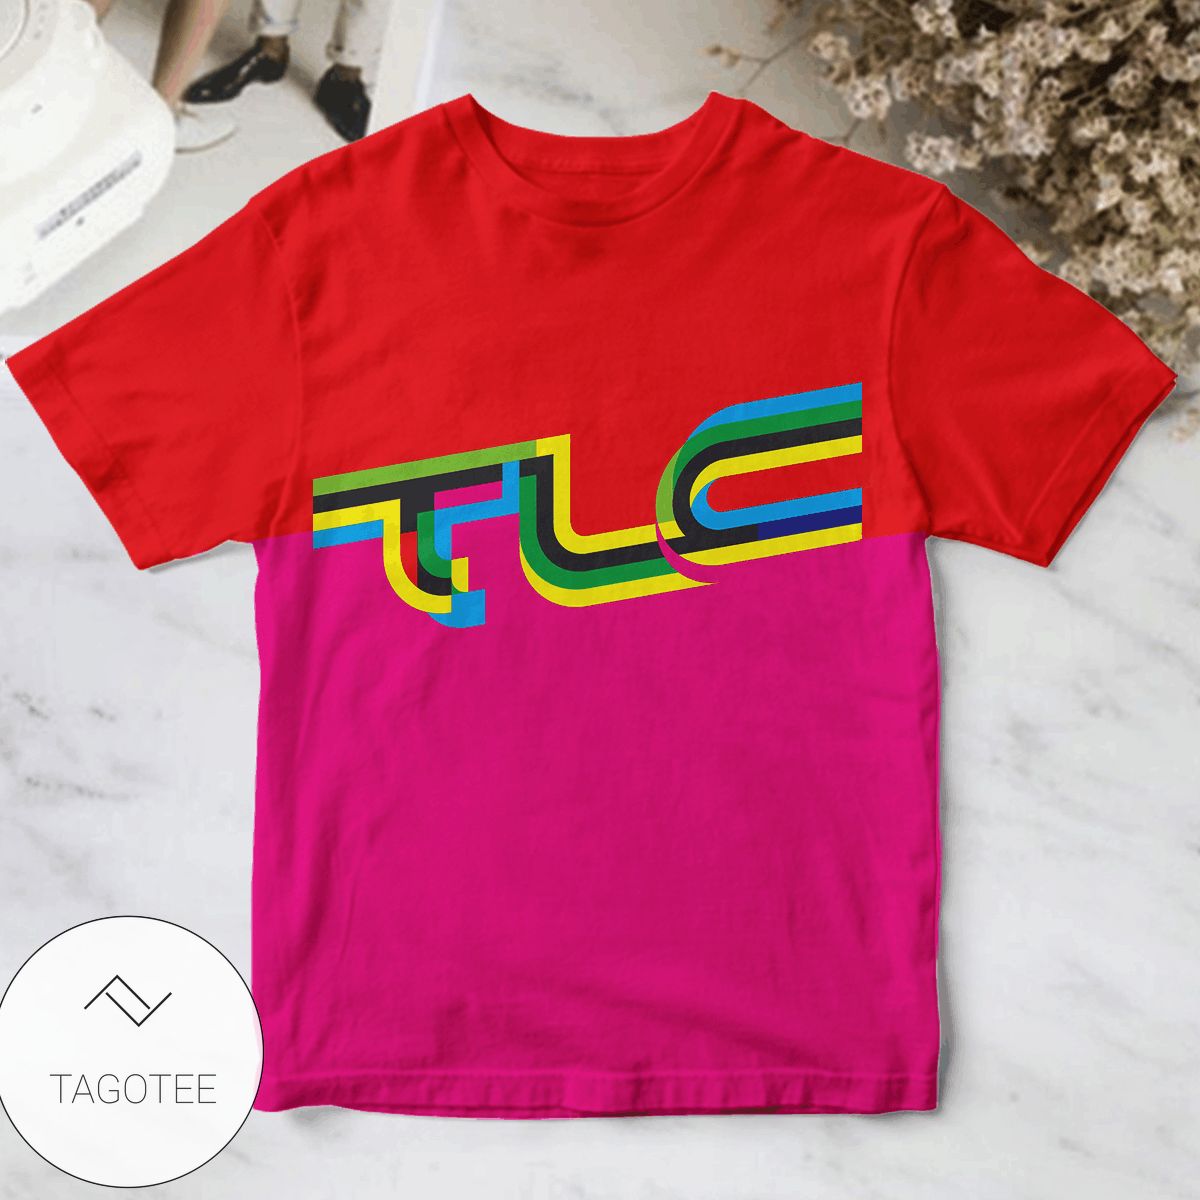 Tlc Self-titled Album Cover Shirt